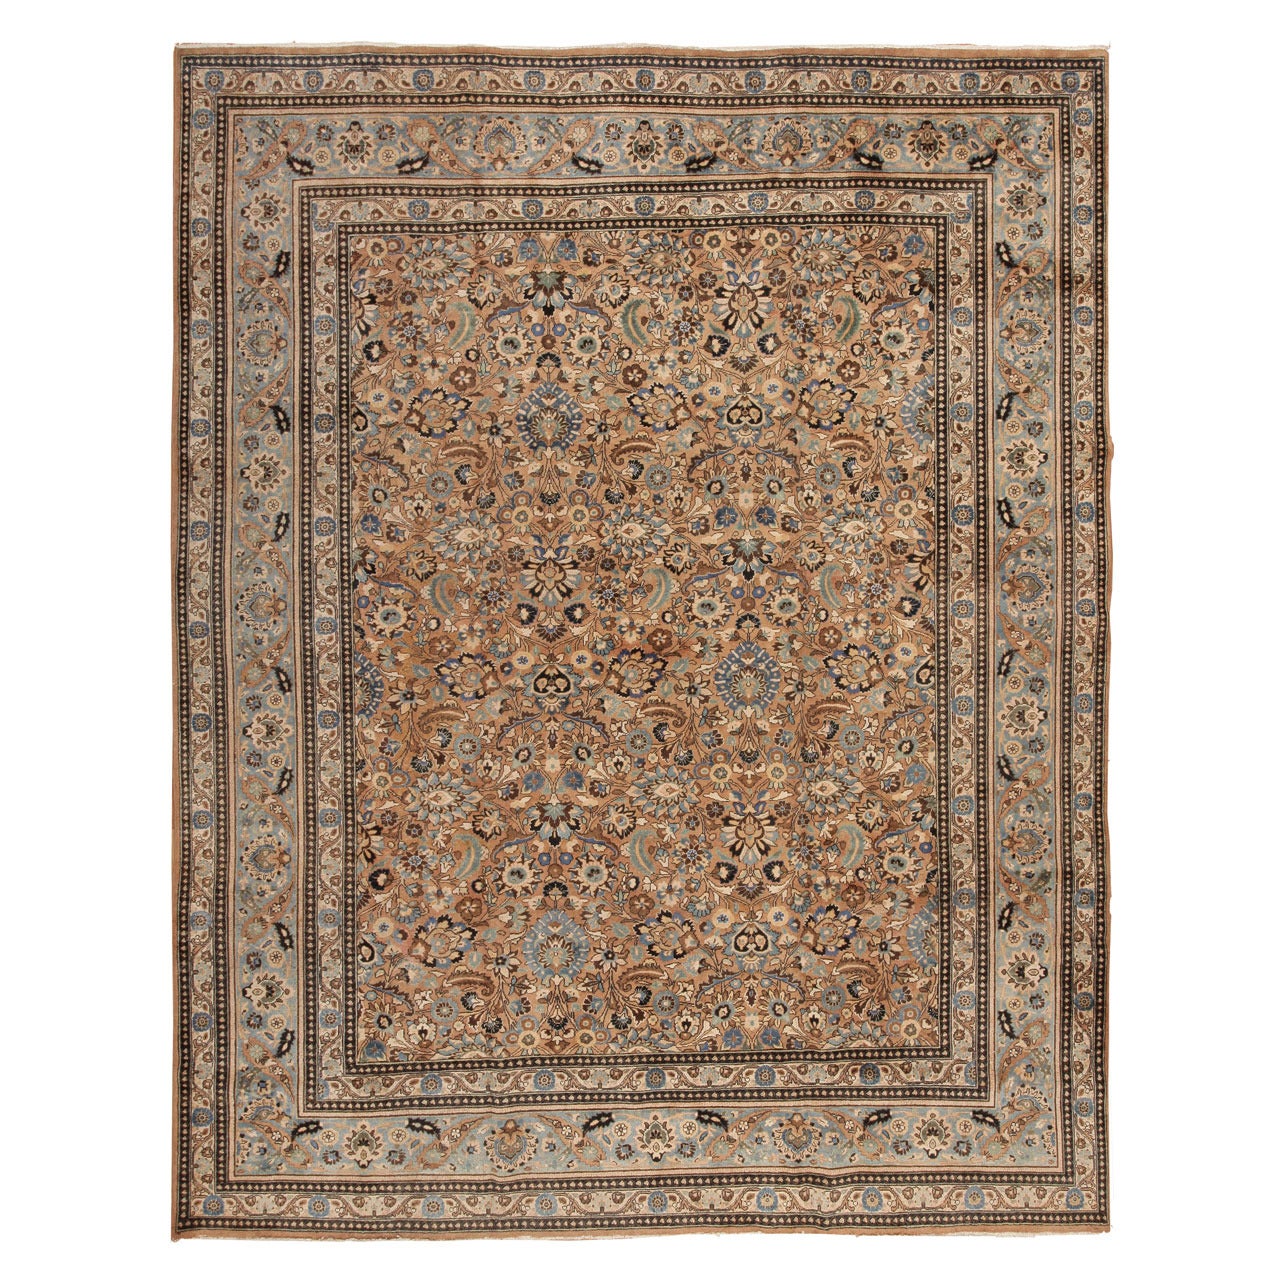 Antique Persian Khorasan Carpet